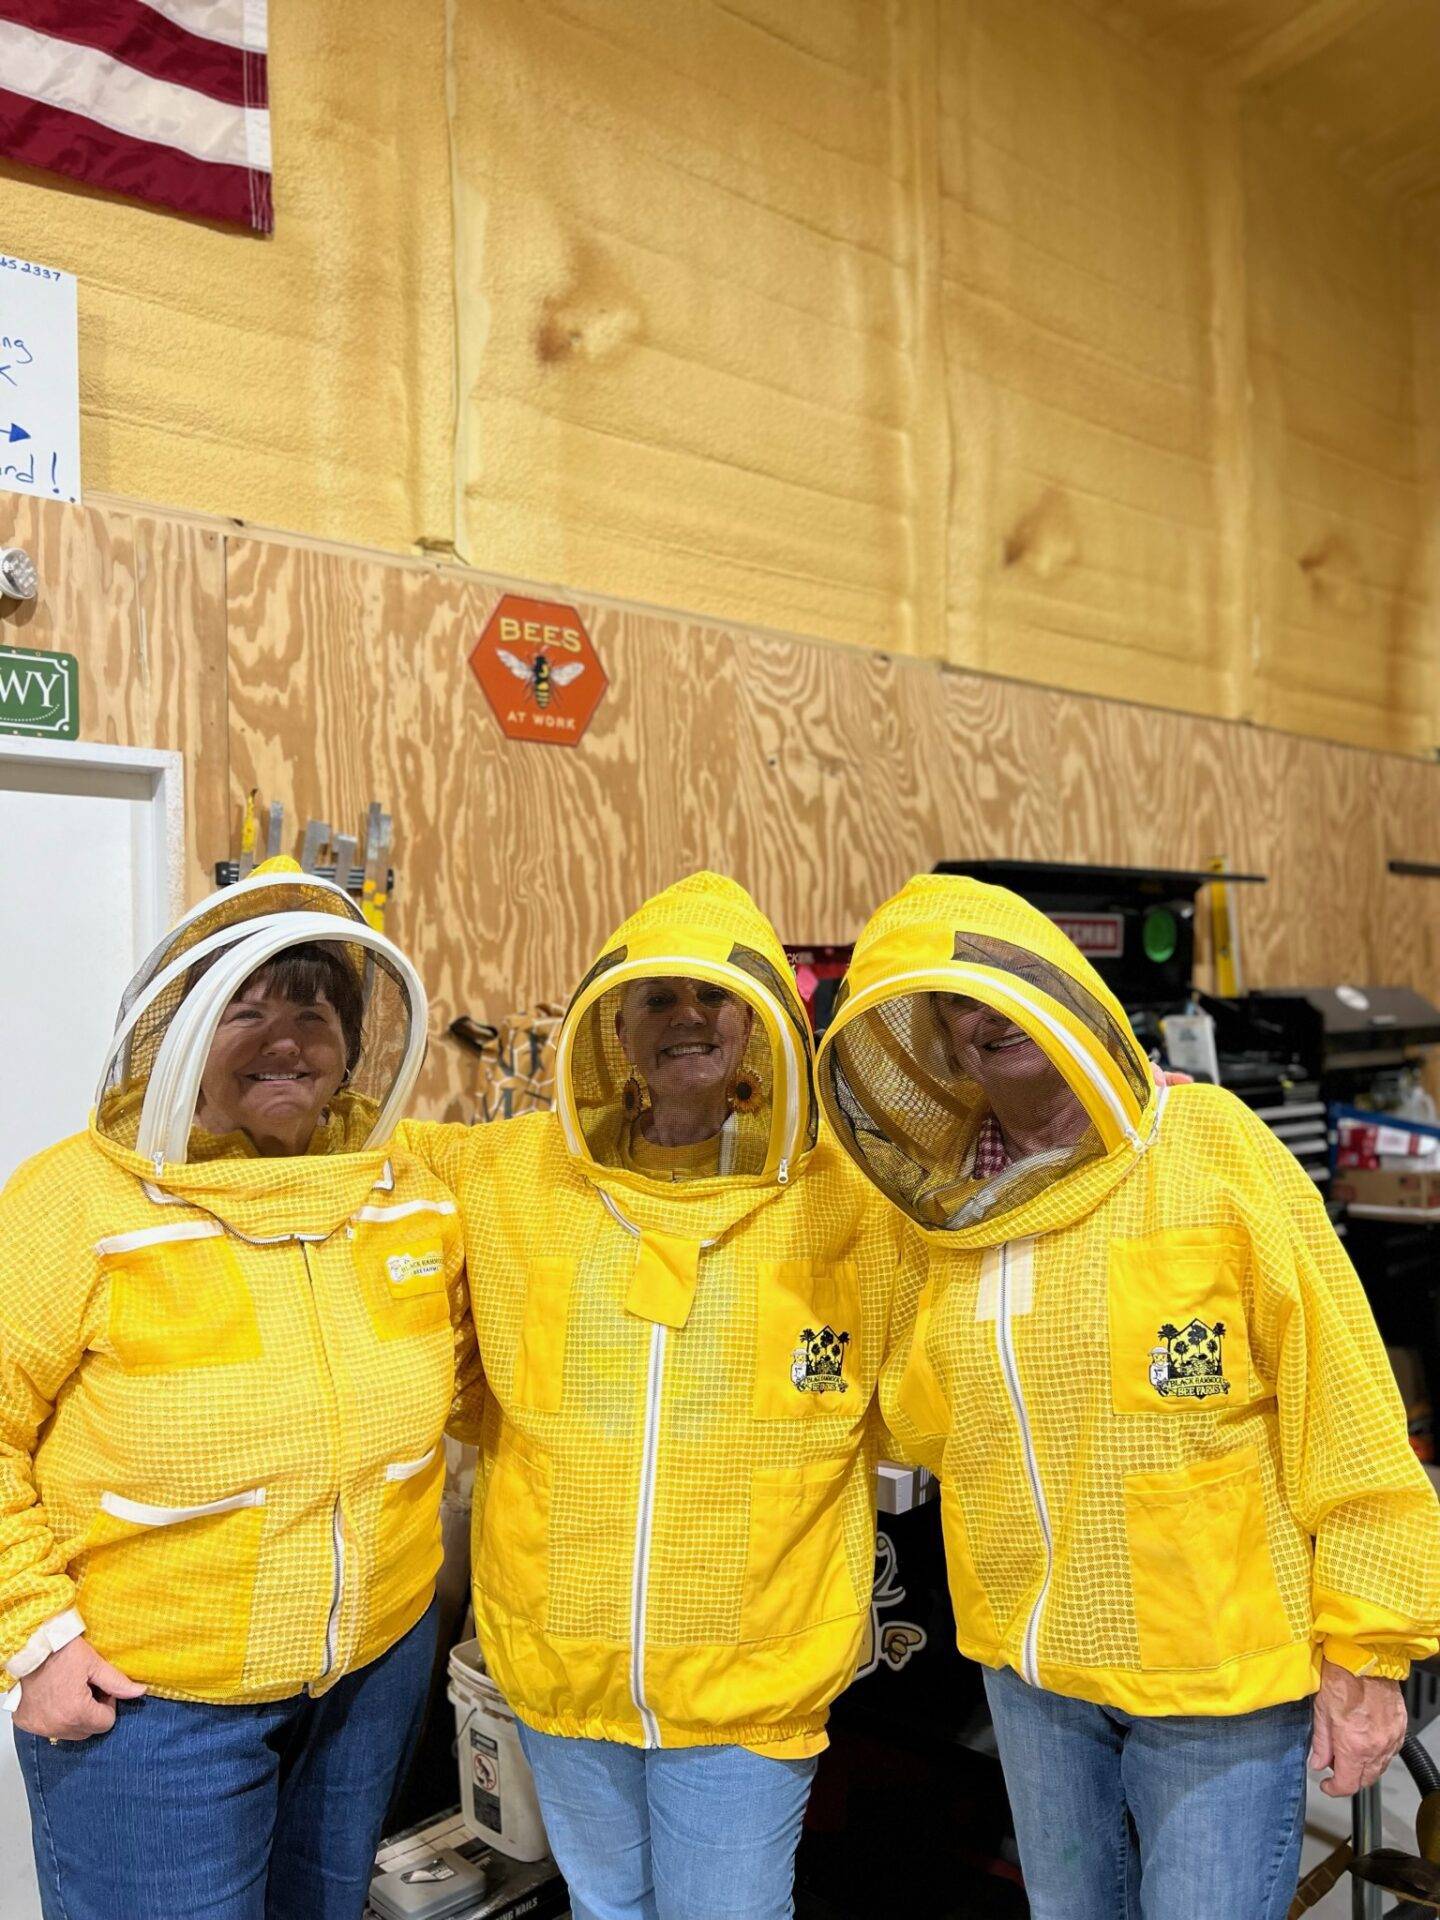 LIFE members with beekeeper hoods on